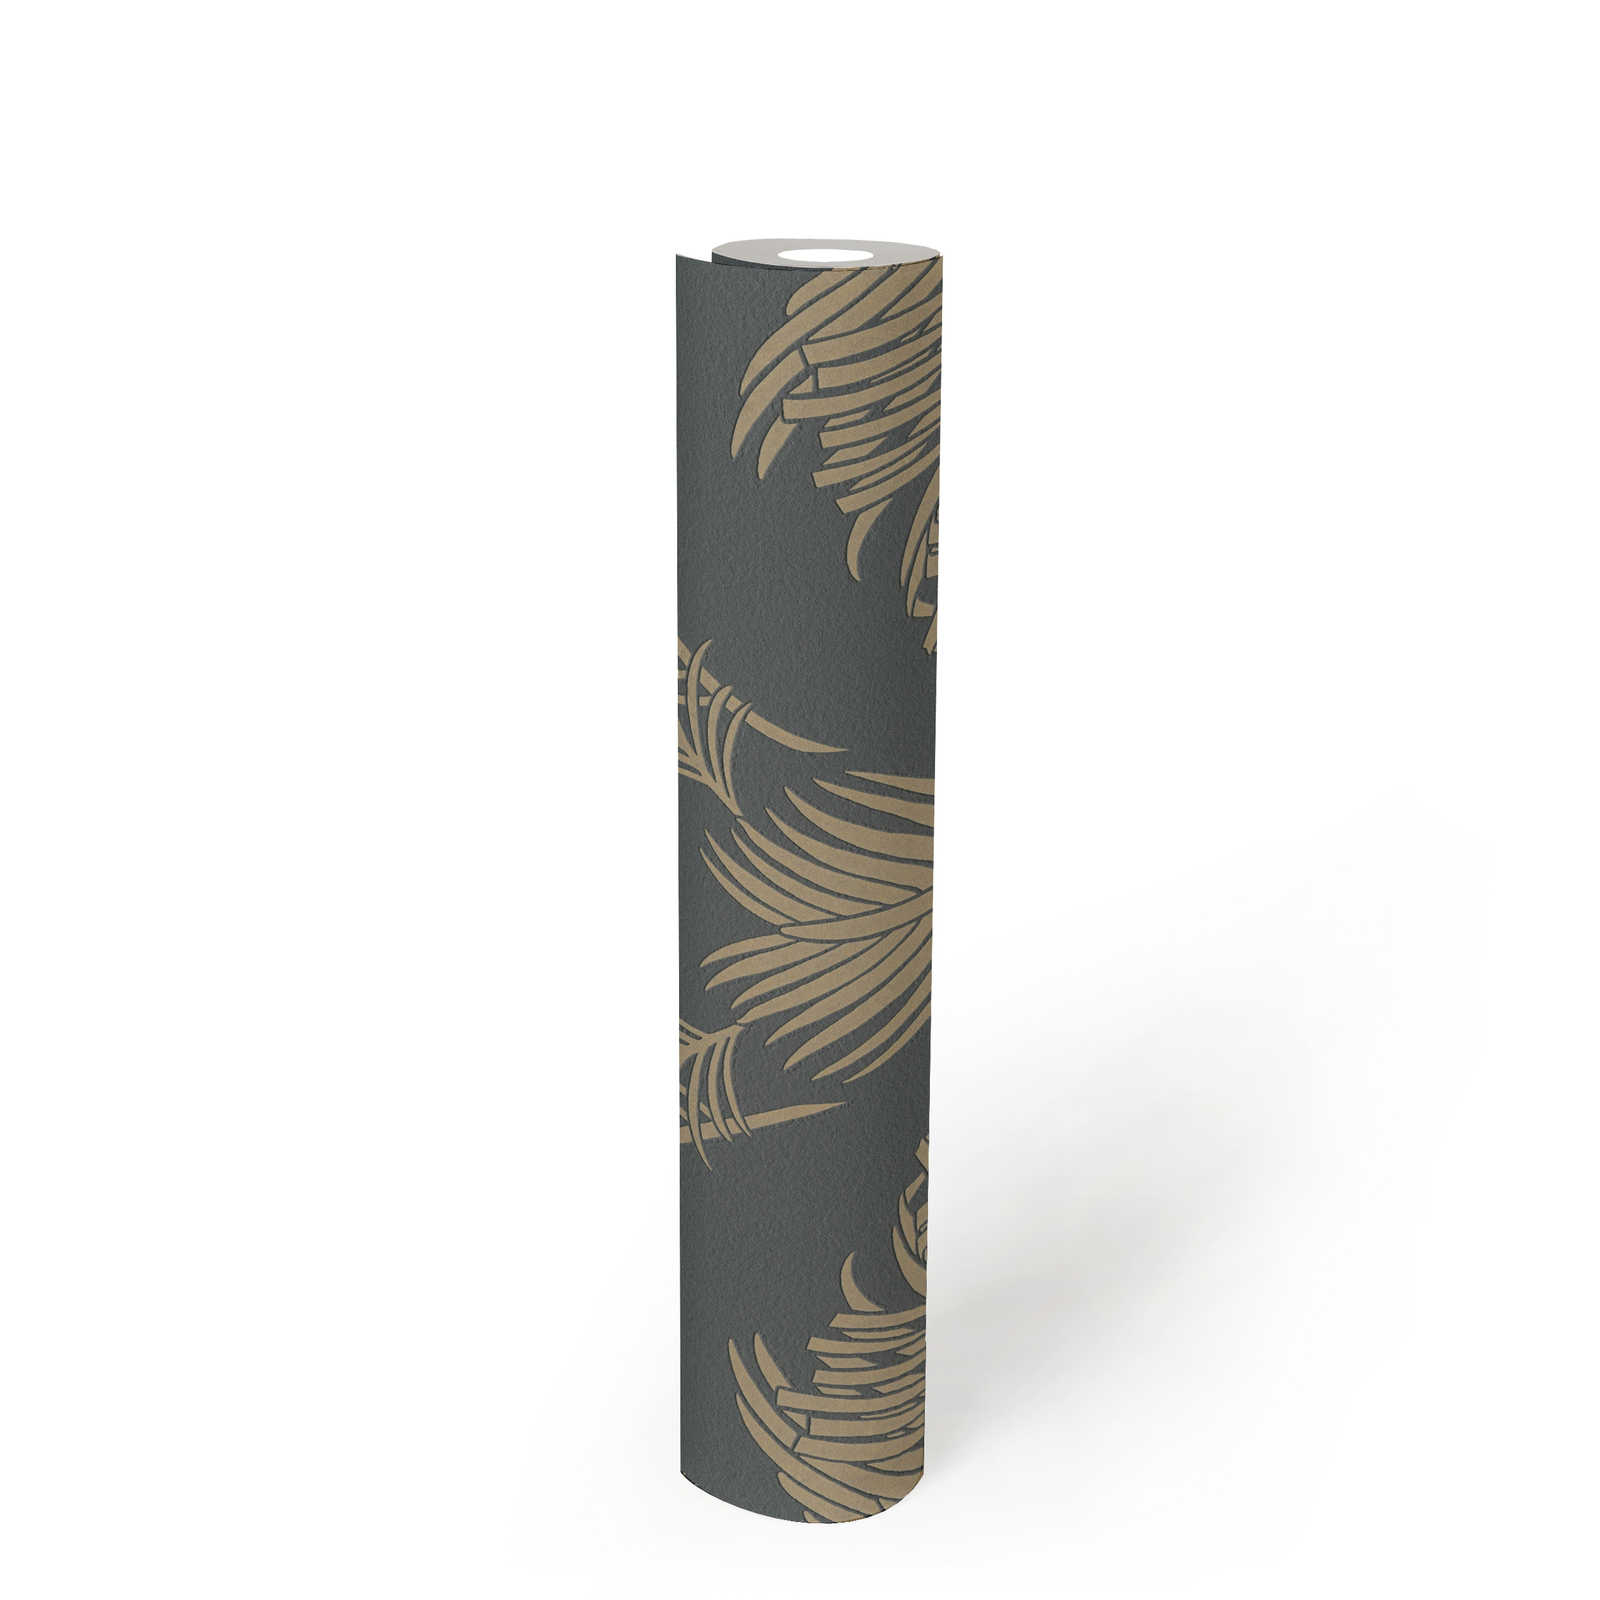             Palmenblätter Tapete Grau & Gold mit Struktur & Metallic Effekt
        